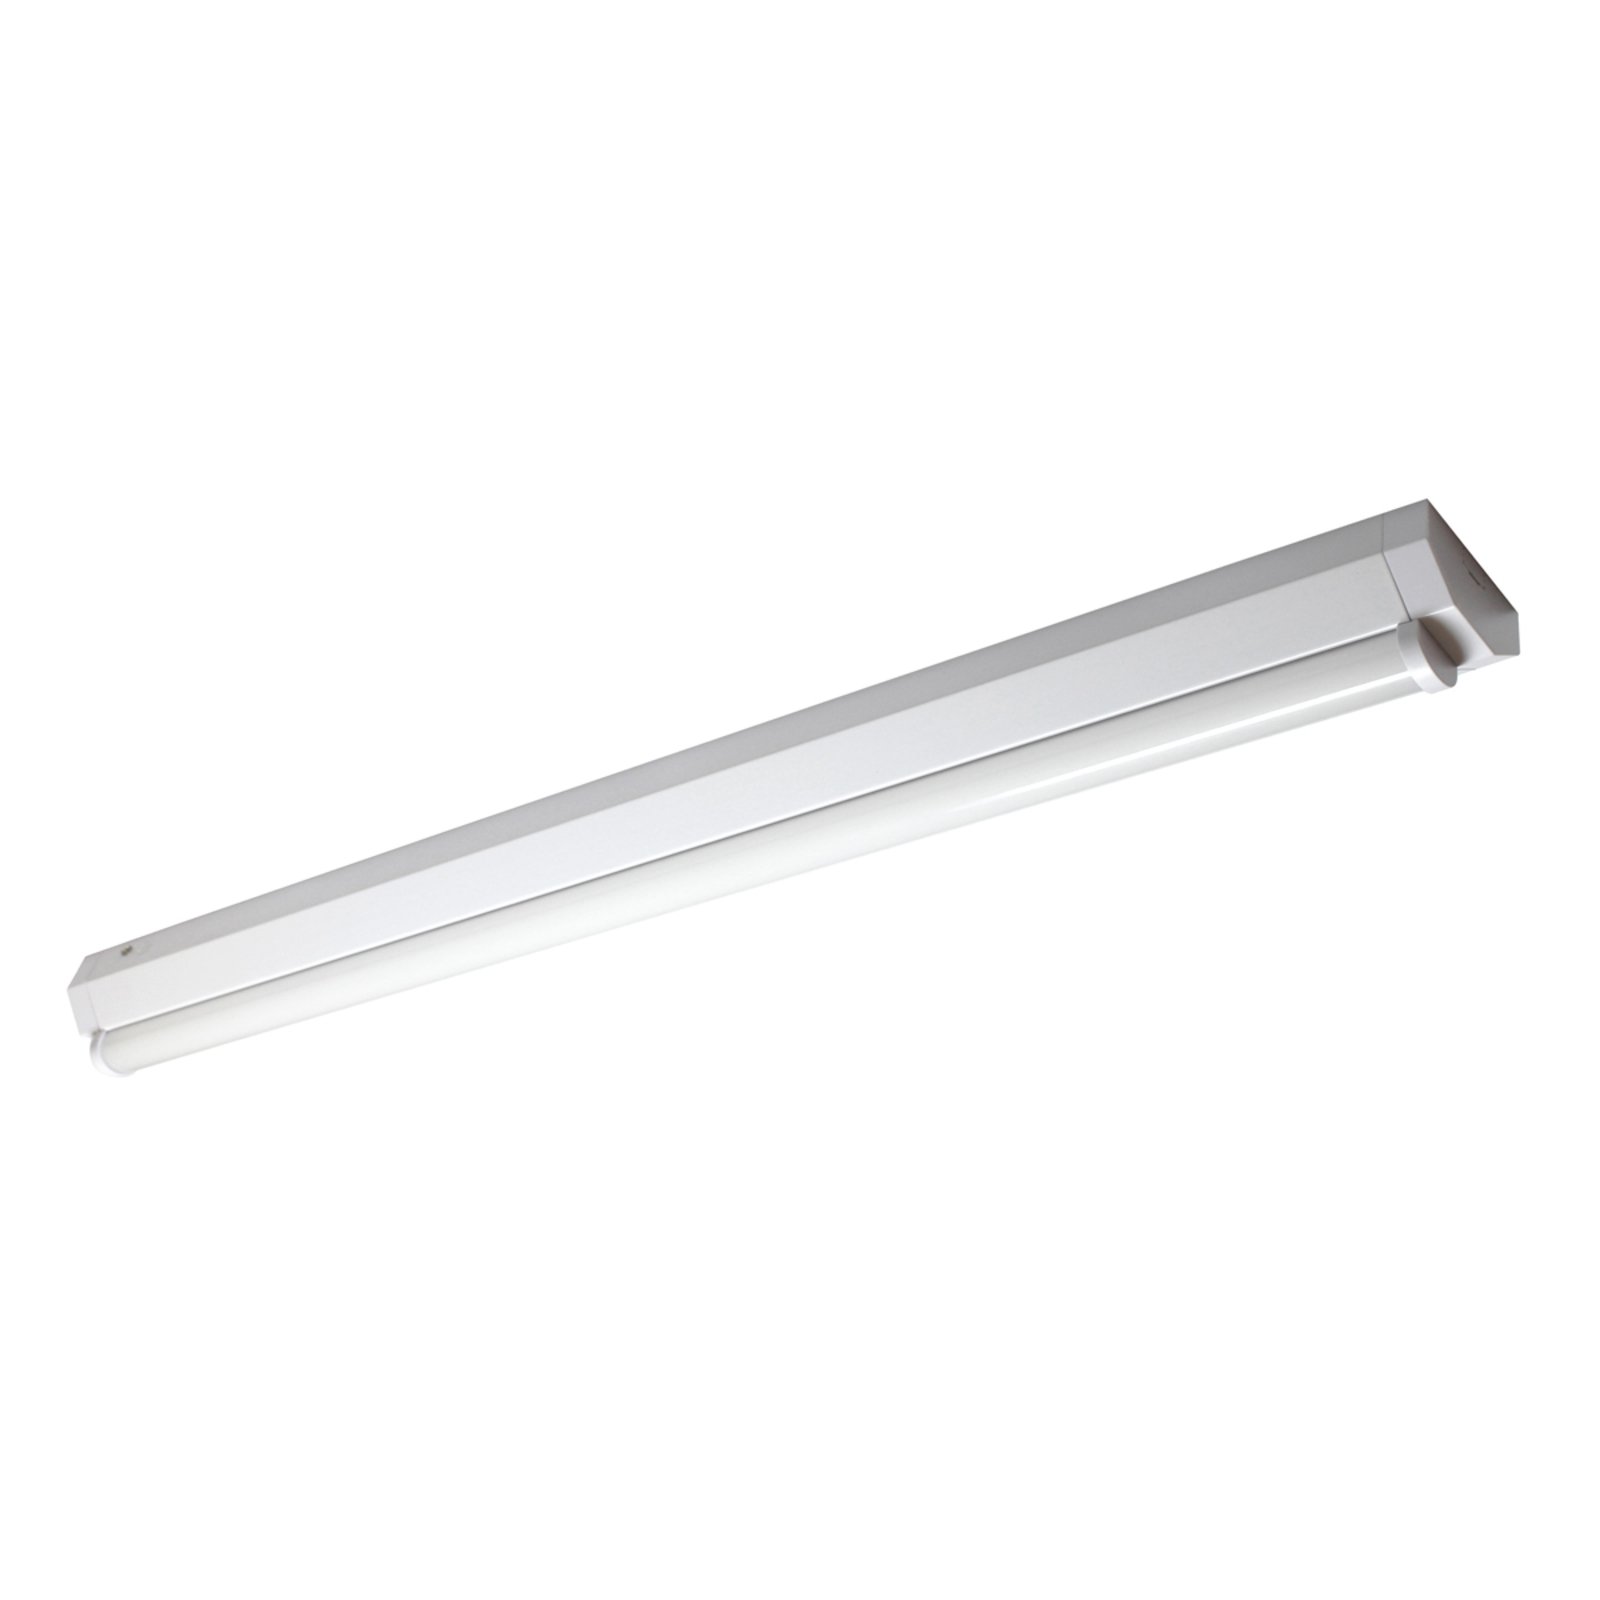 Universelle LED-Deckenlampe Basic 1 - 120cm